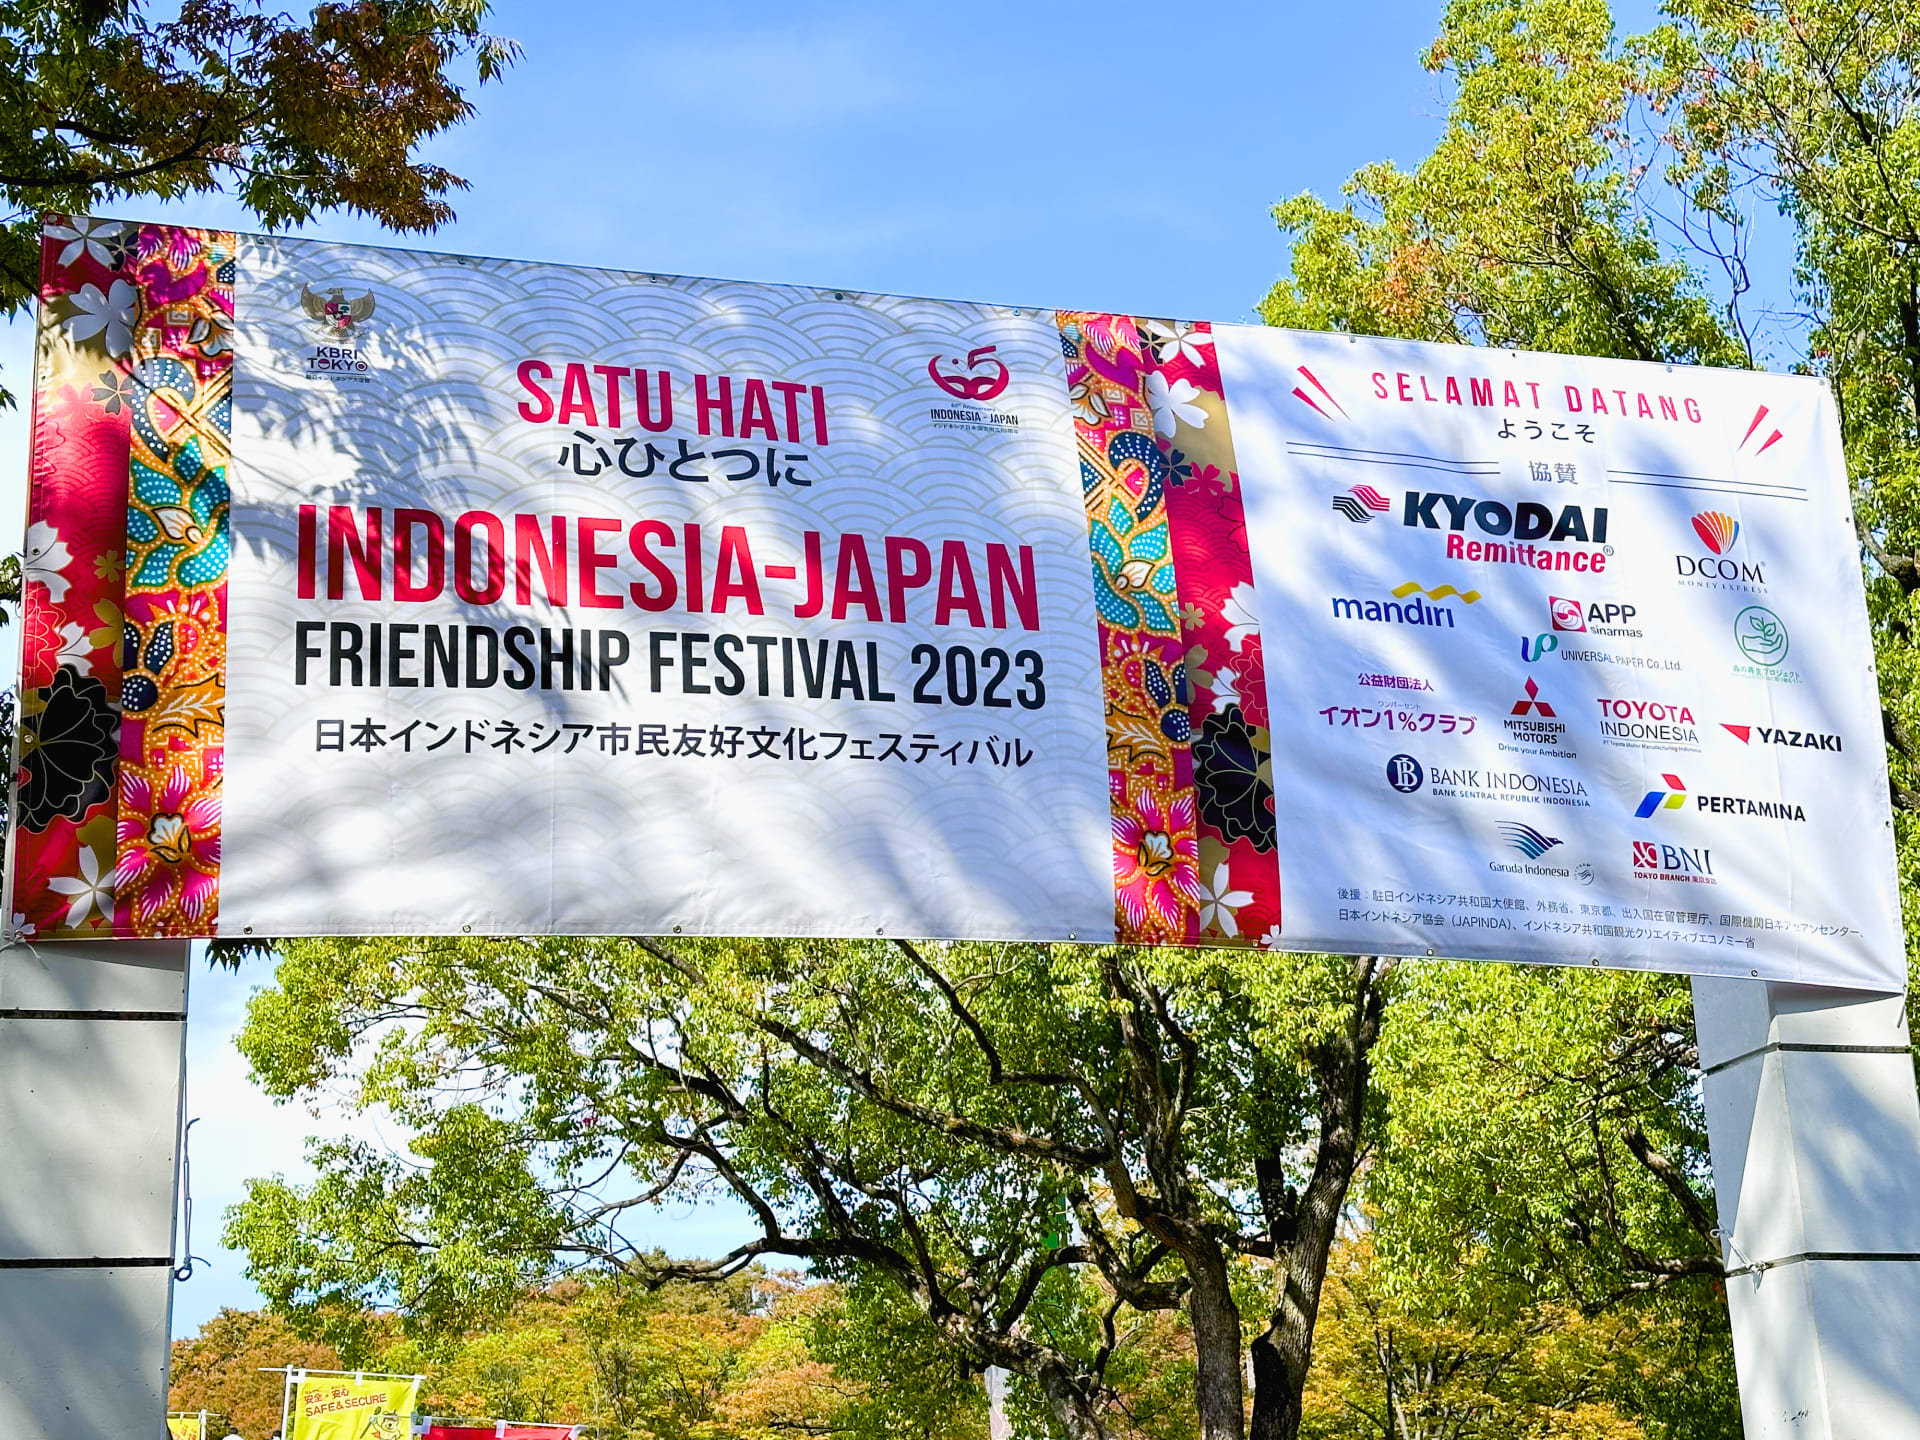 Indonesia-Japan Friendship Festival 2023